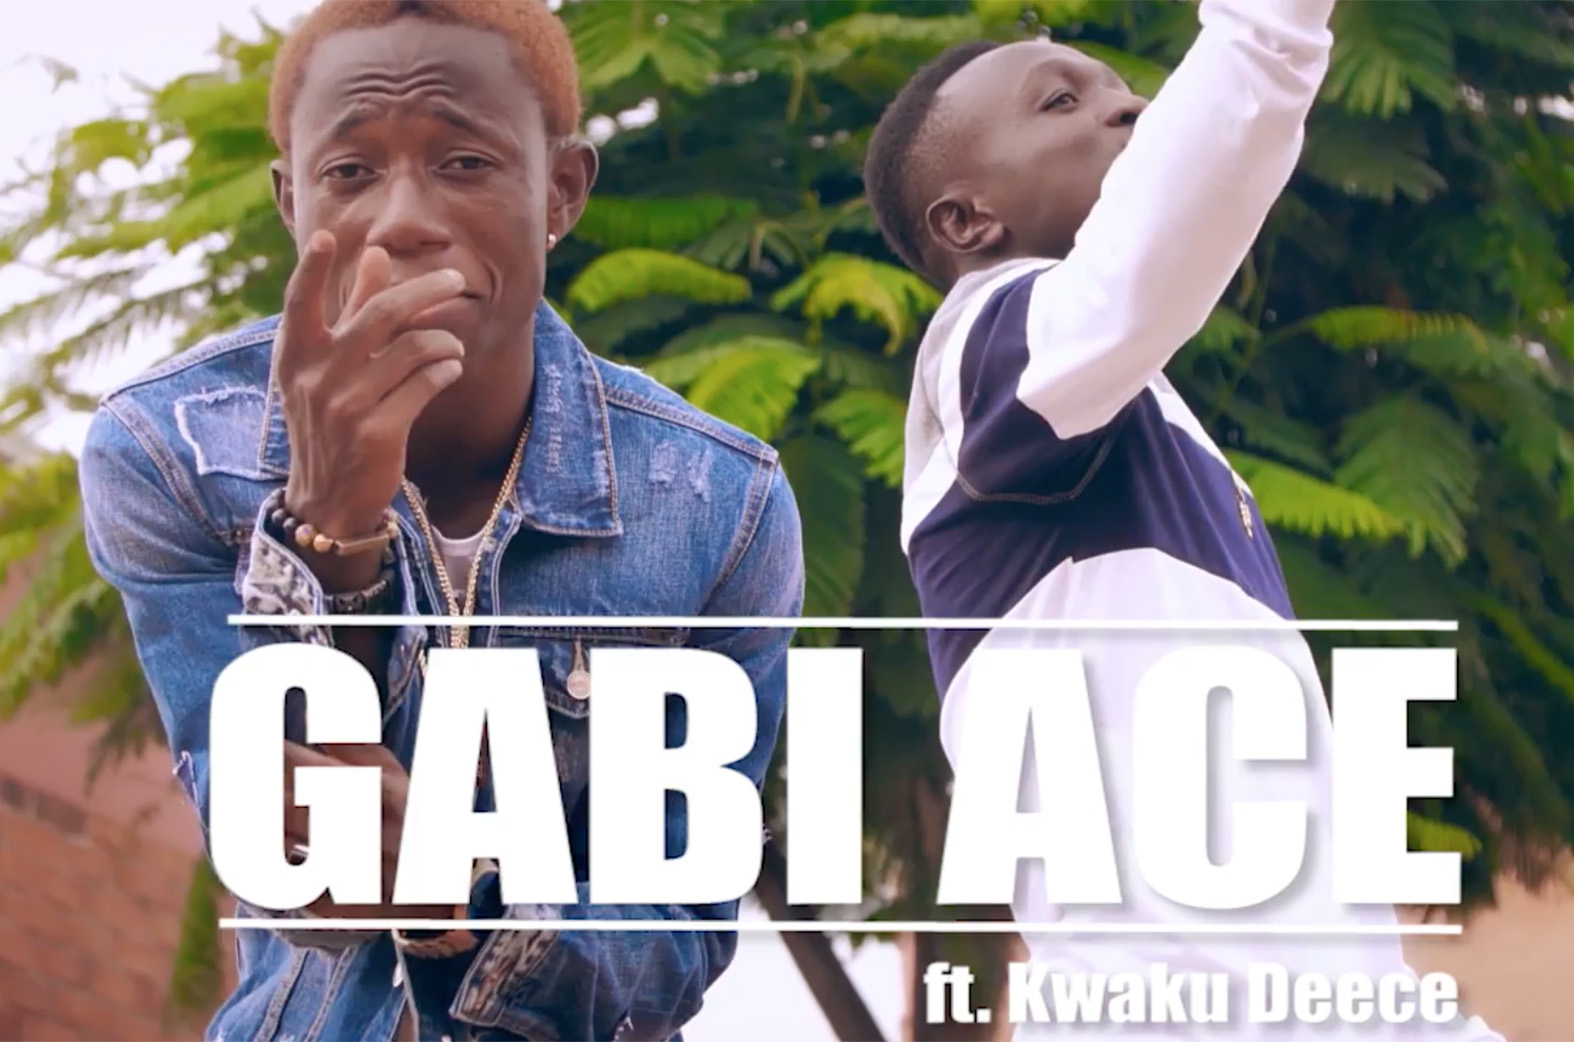 Abrafi by Gabi Ace feat. Kwaku Deece